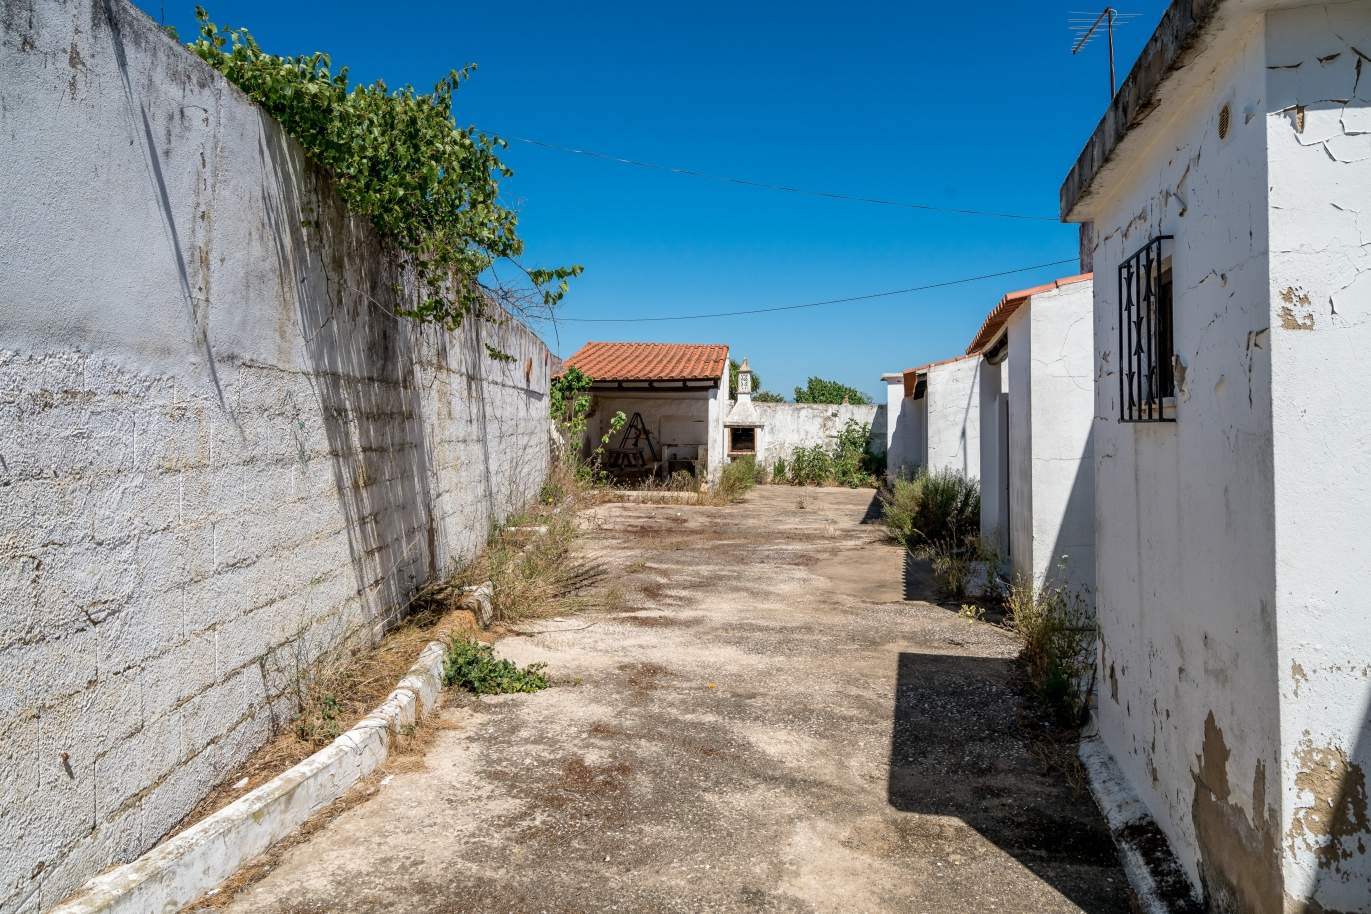 Immobilienverkauf in Alcantarilha, Silves, Algarve, Portugal_105719